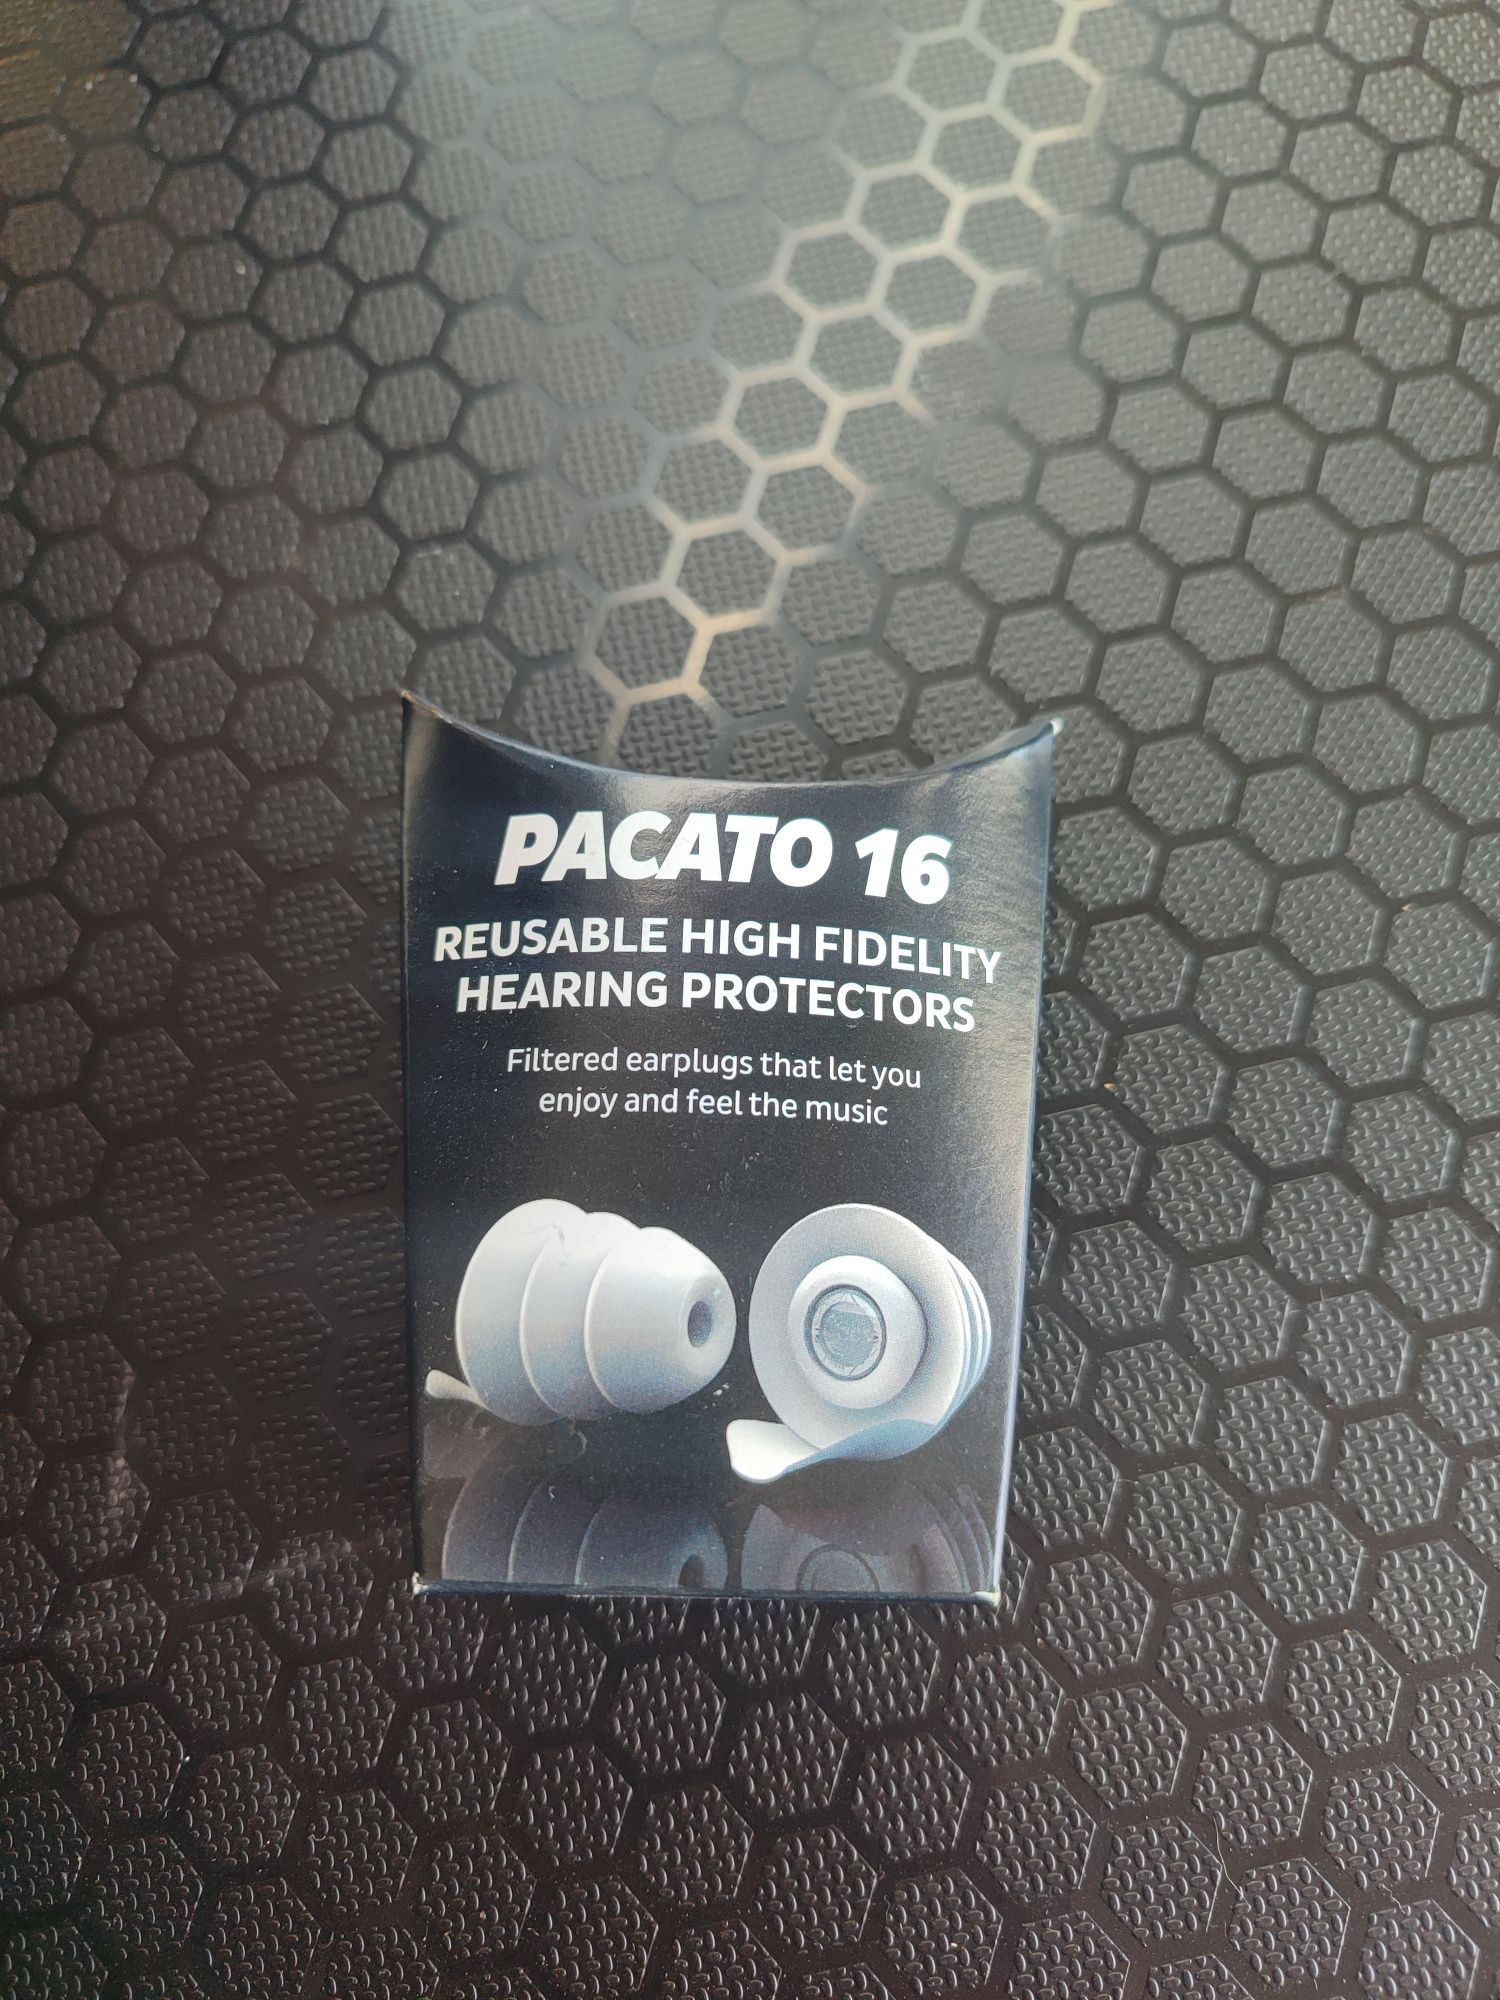 Protetor auditivo ear plugs Pacato 16